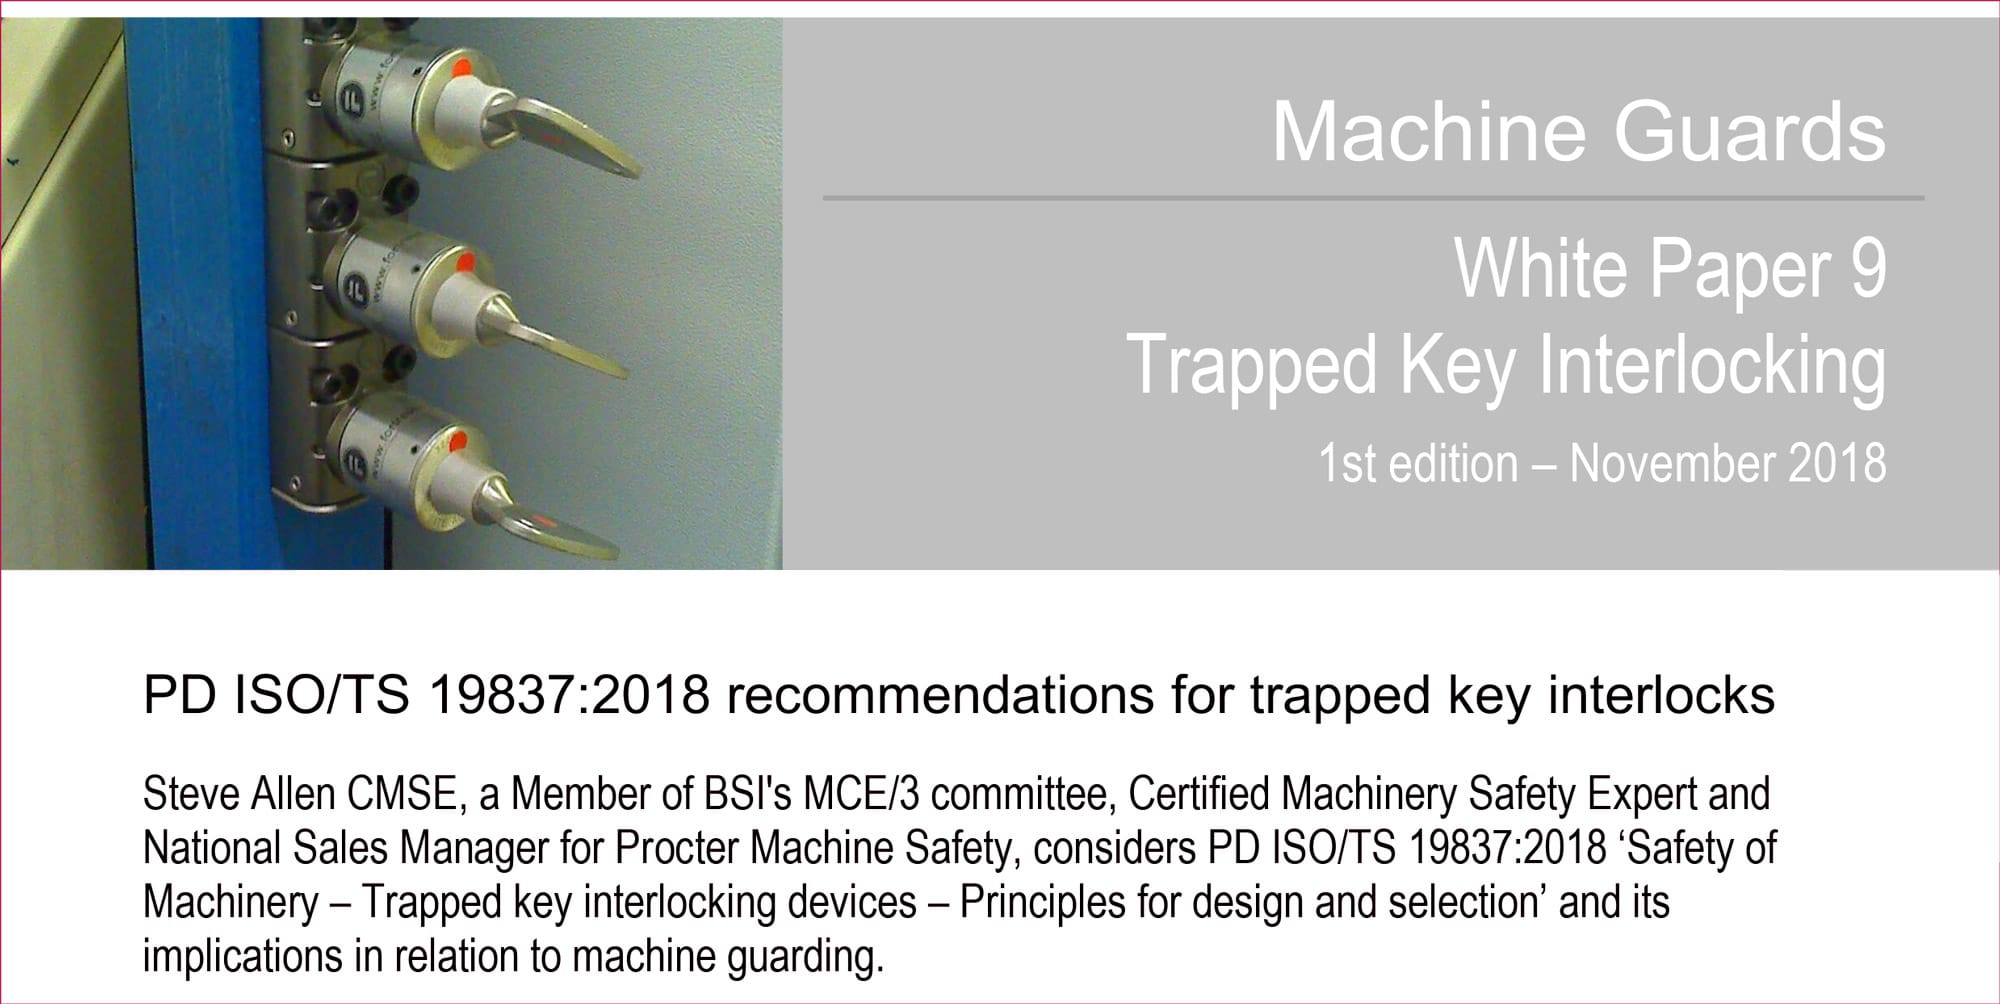 PD ISO/TS 19837:2018 for trapped key interlocks